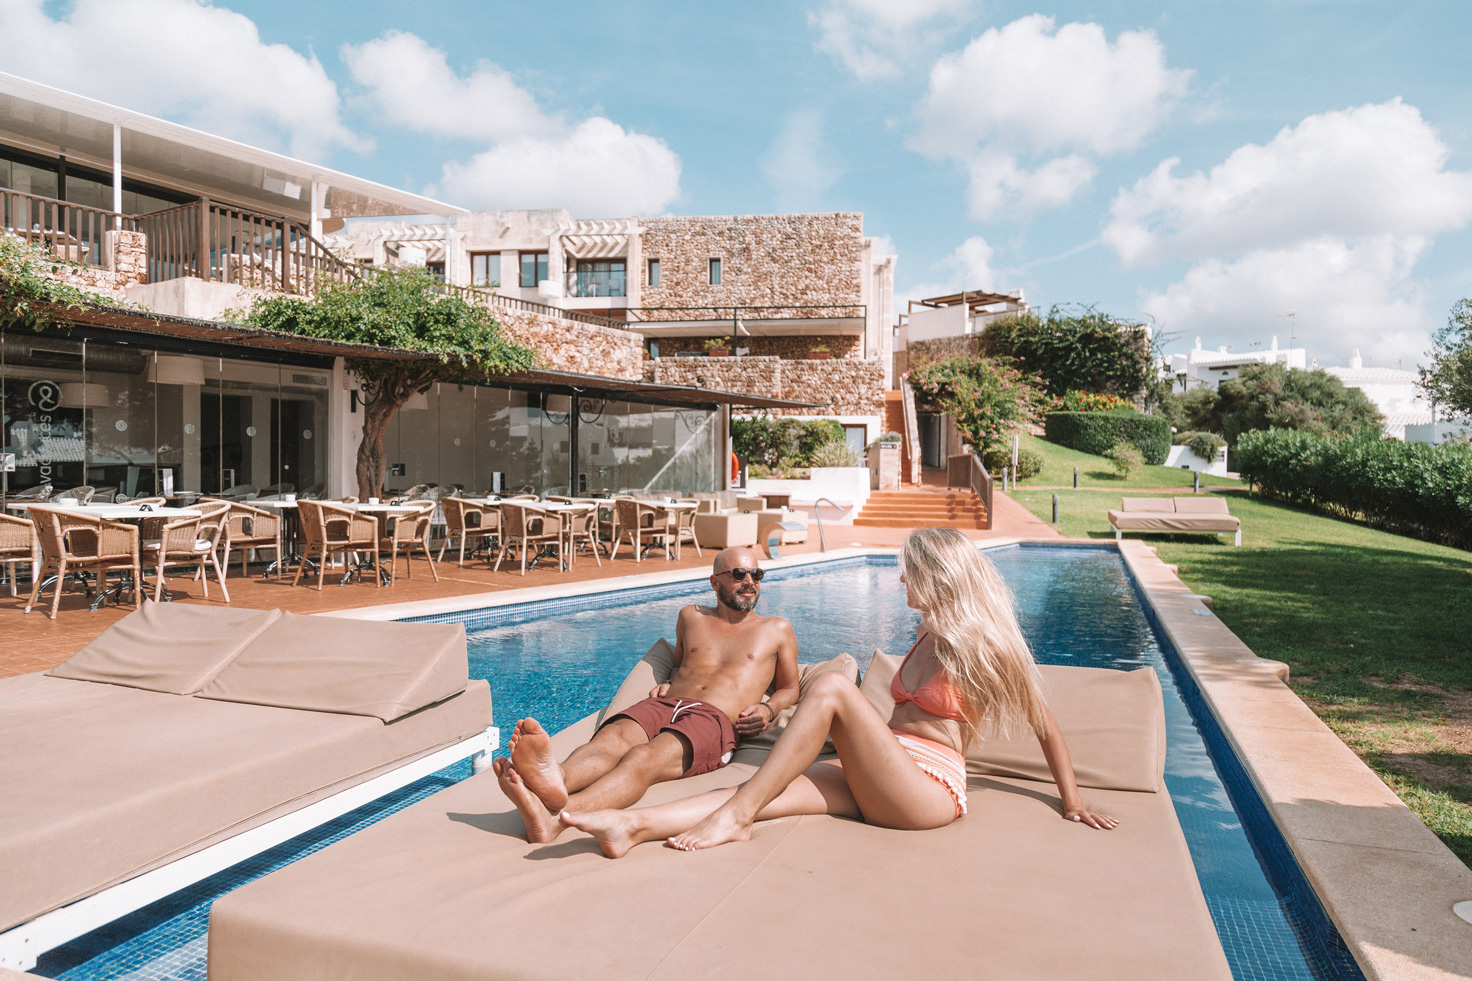 Pierre & Vacances – Premium stay in Menorca